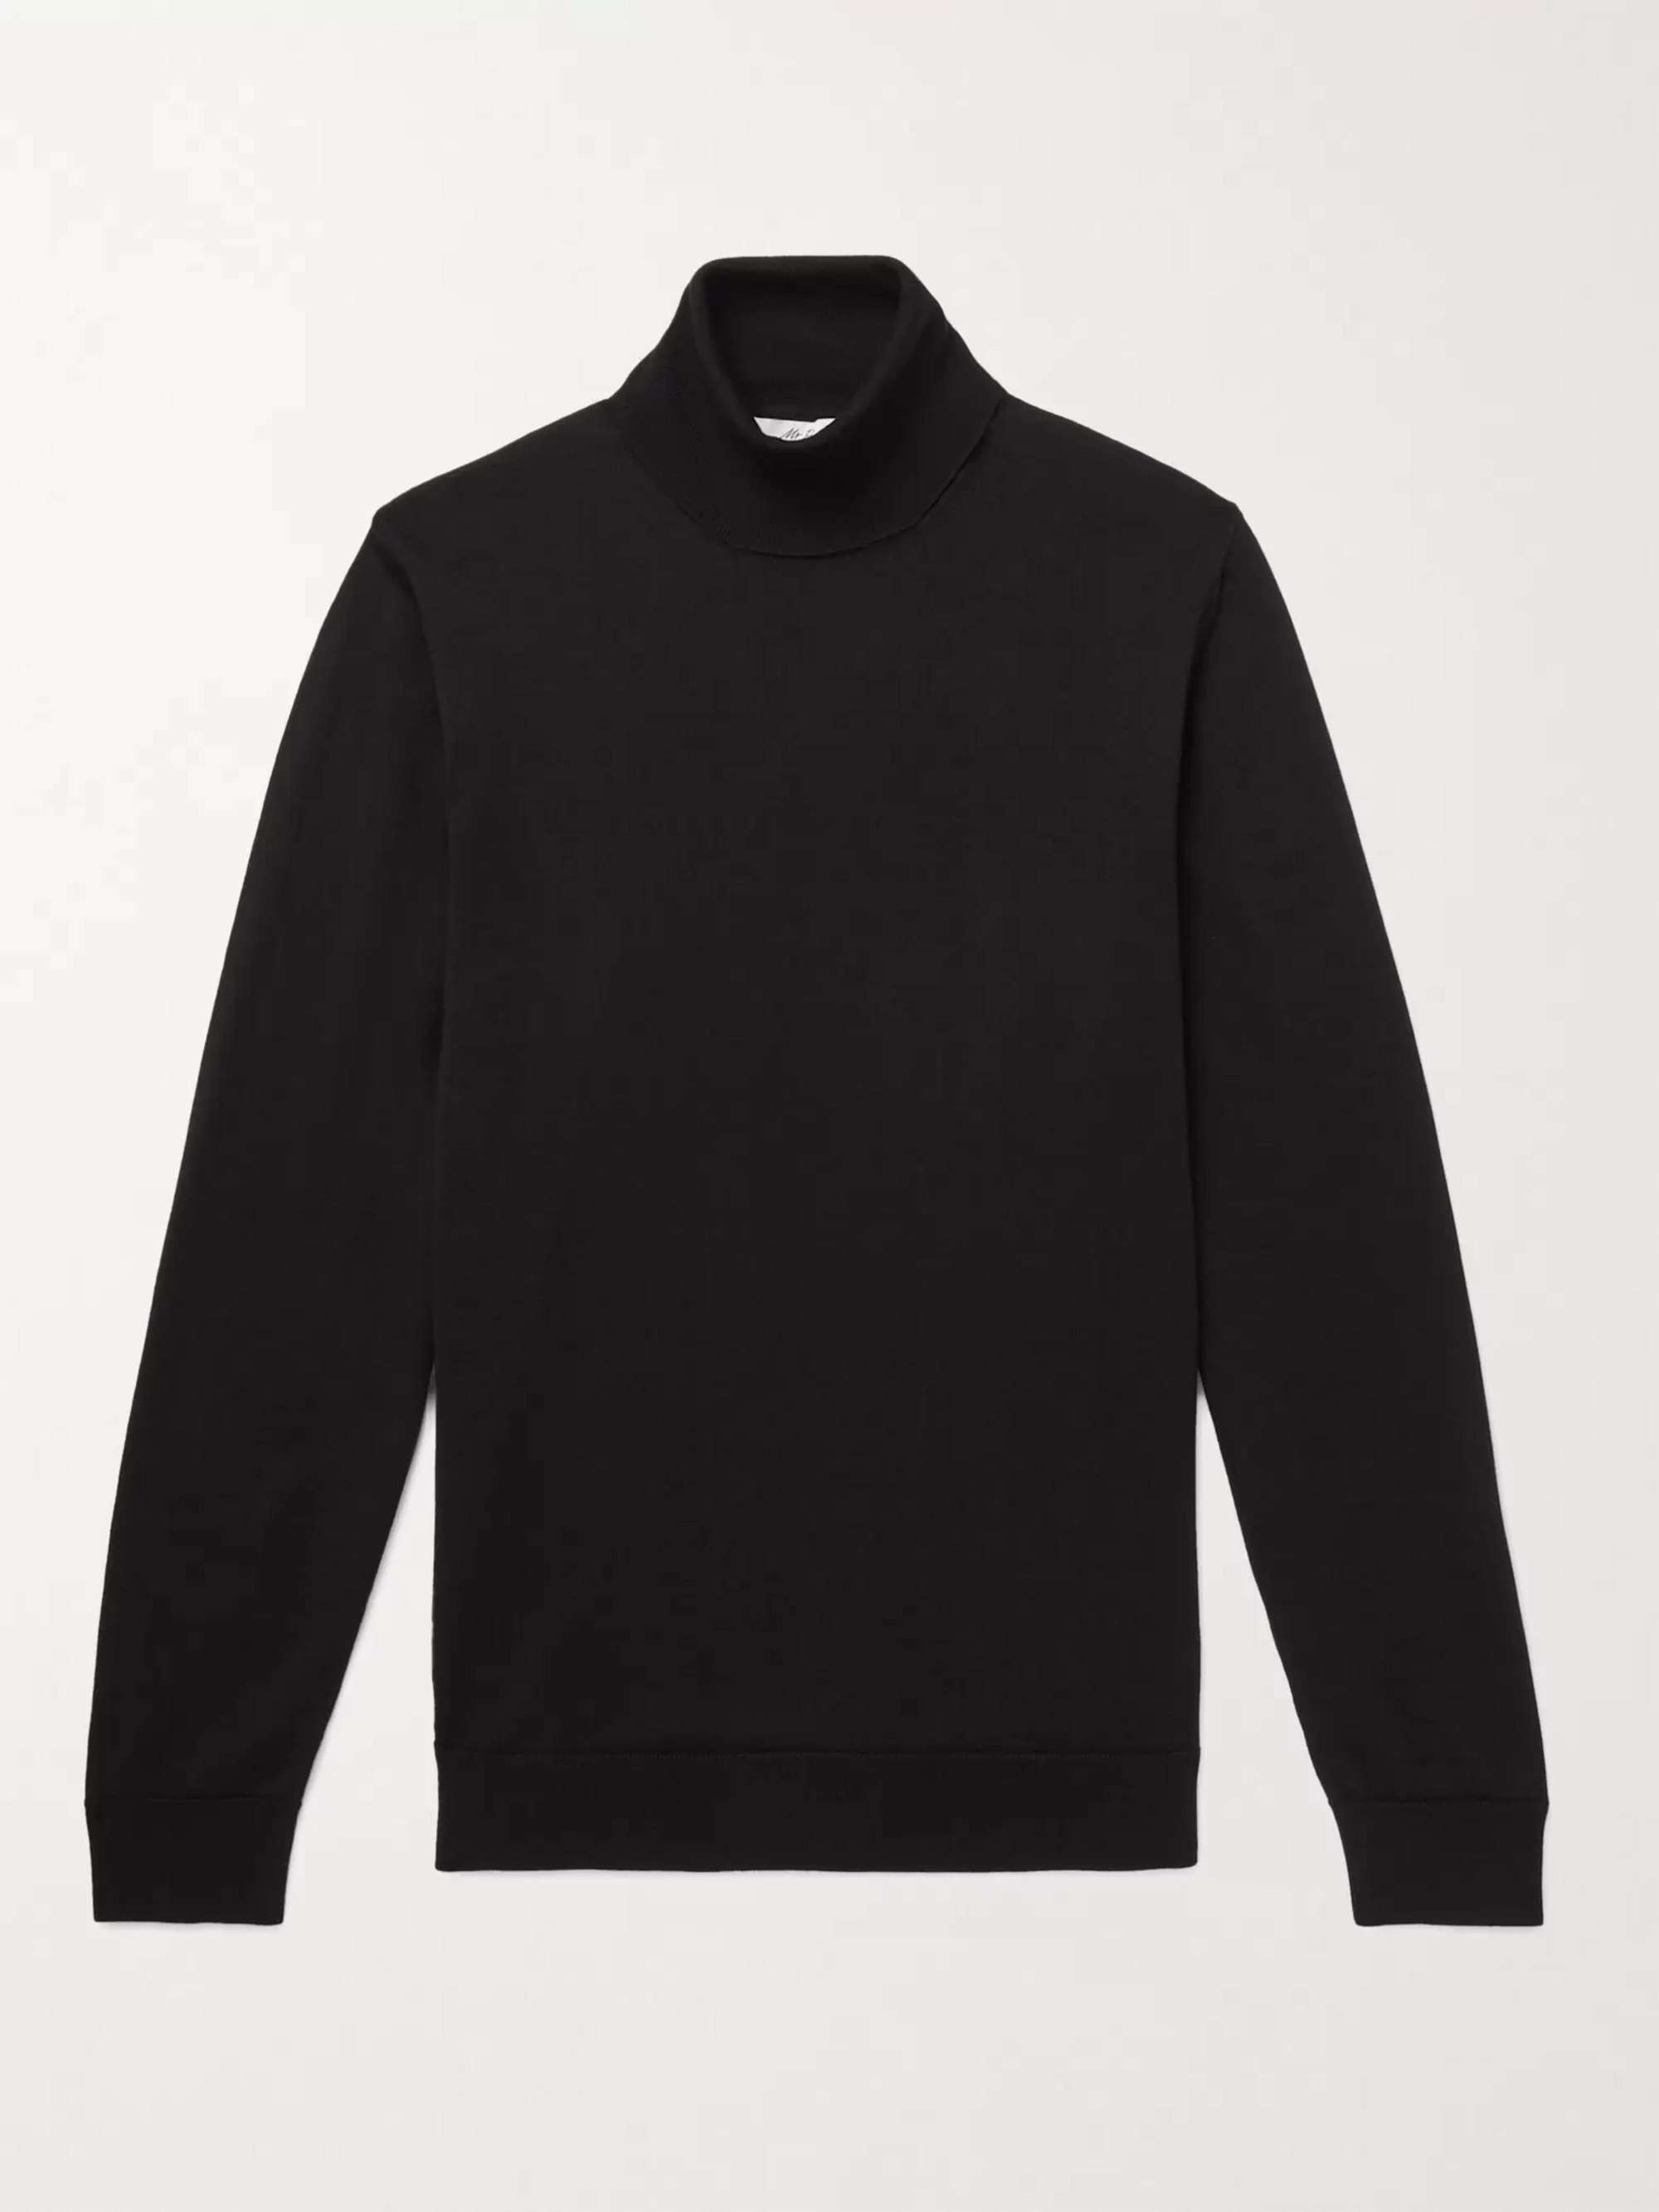 MR P. Slim-Fit Merino Wool Rollneck Sweater for Men | MR PORTER